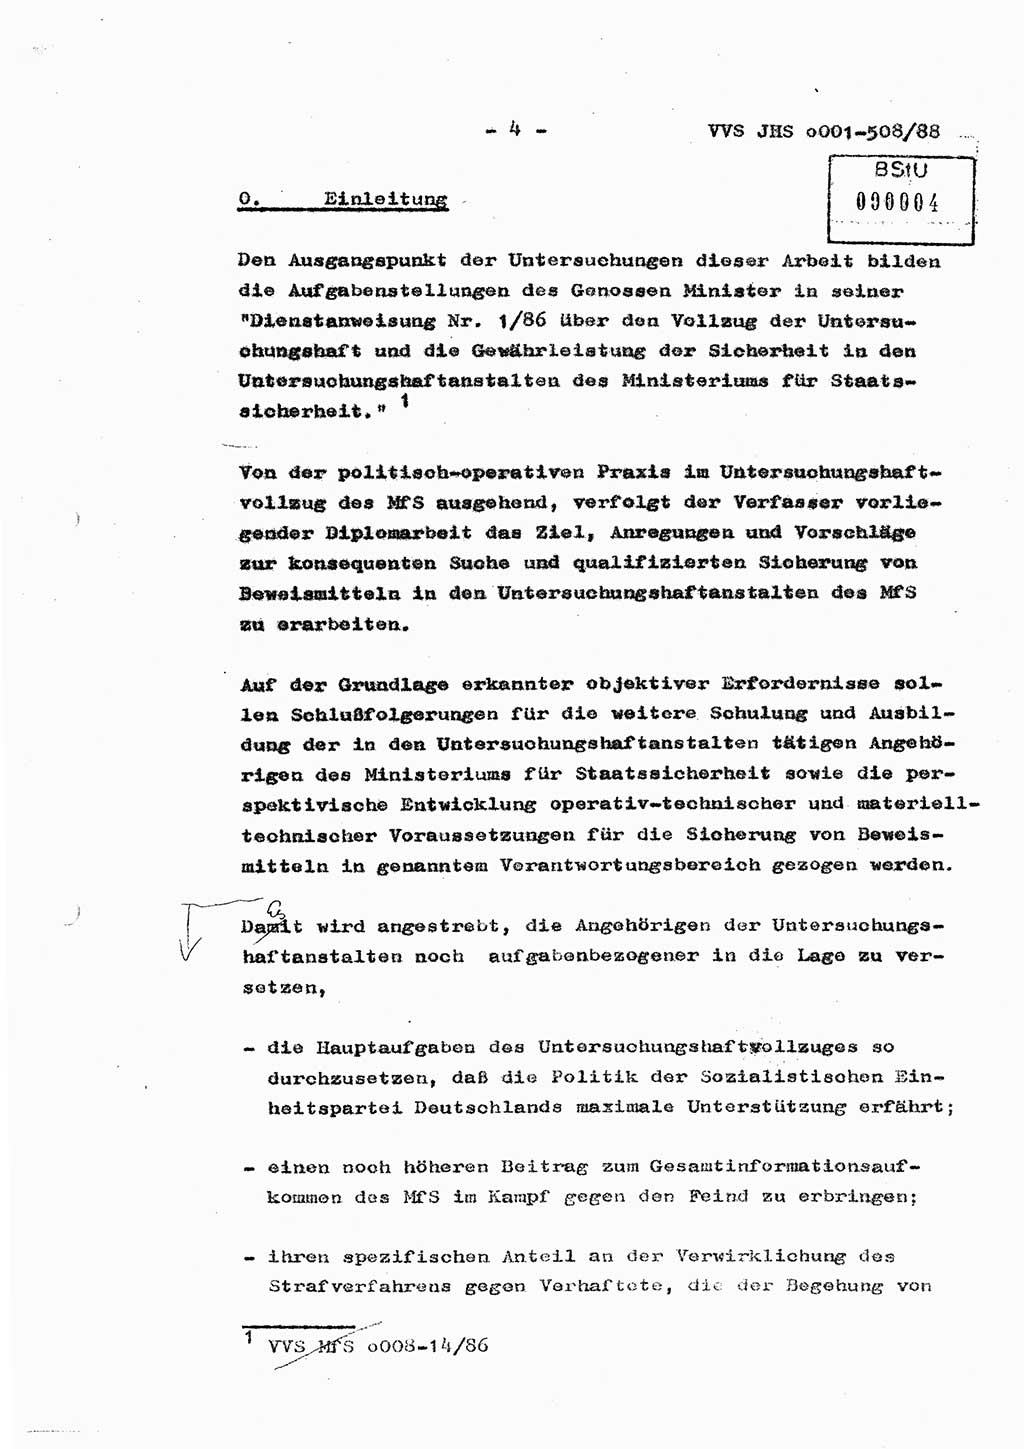 Diplomarbeit Hauptmann Christian Kätzel (Abt. ⅩⅣ), Ministerium für Staatssicherheit (MfS) [Deutsche Demokratische Republik (DDR)], Juristische Hochschule (JHS), Vertrauliche Verschlußsache (VVS) o001-508/88, Potsdam 1988, Blatt 4 (Dipl.-Arb. MfS DDR JHS VVS o001-508/88 1988, Bl. 4)